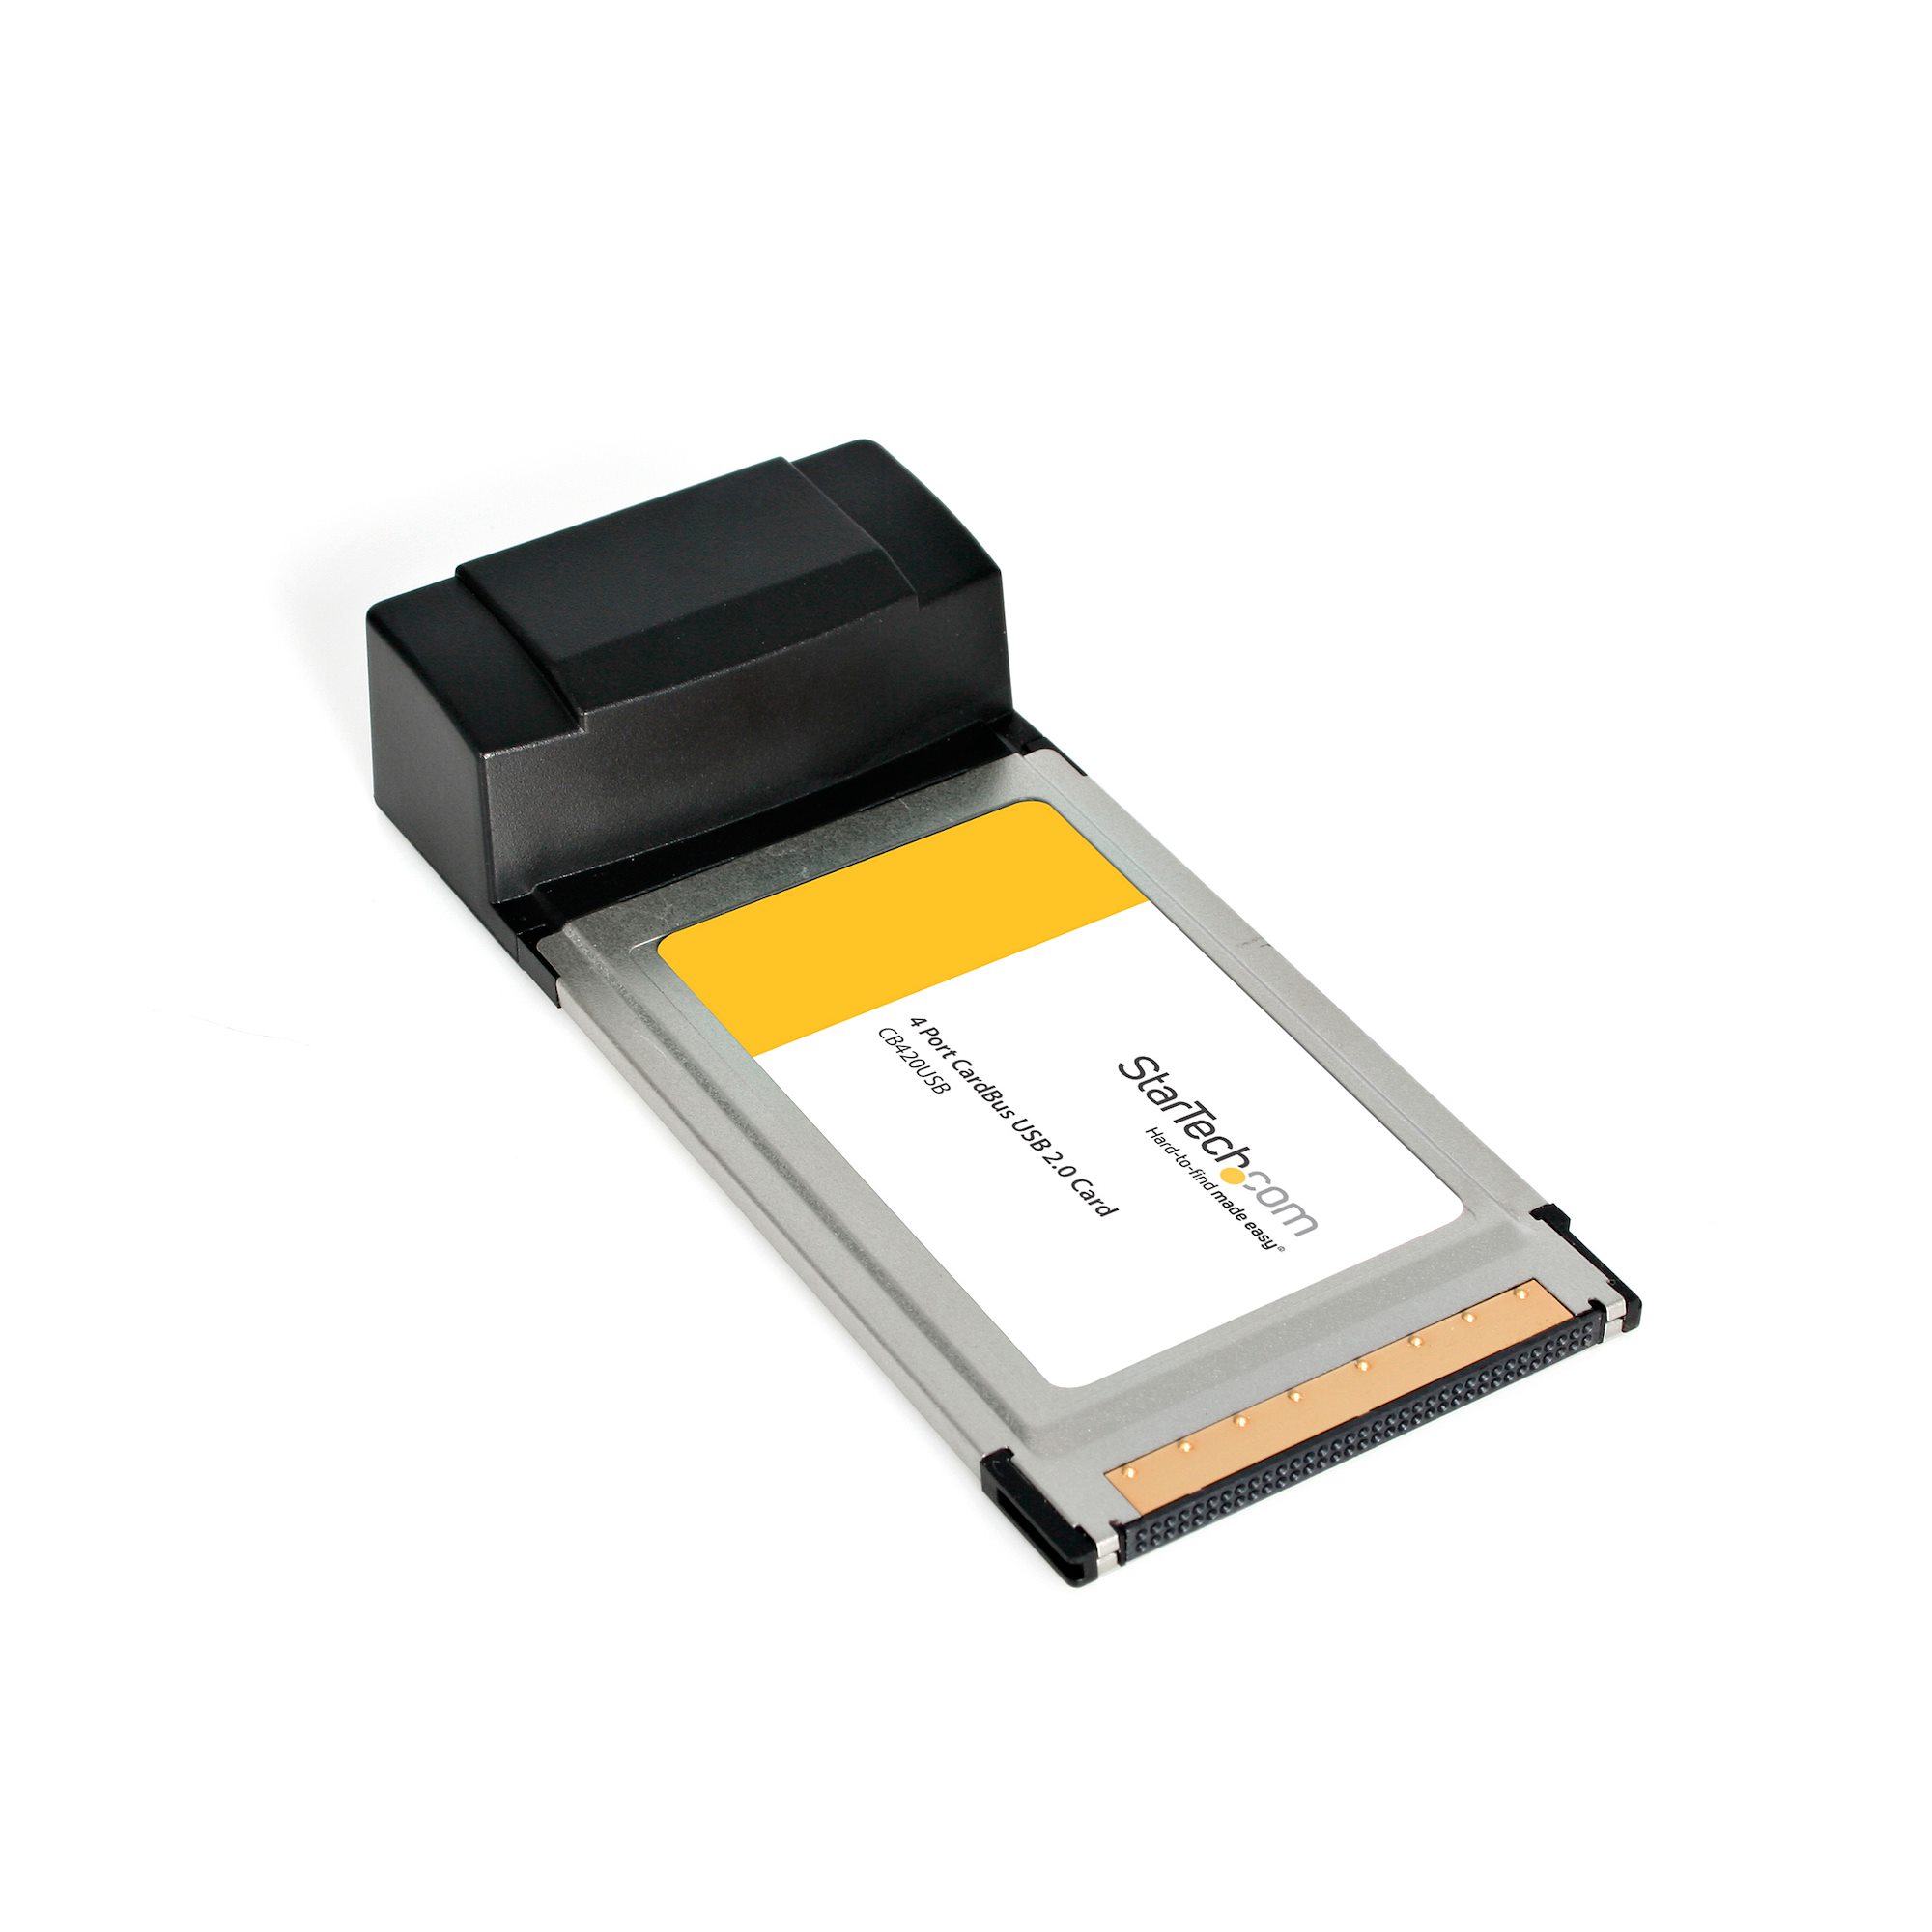 4 CardBus USB 2.0 PC Card Adapter - Tarjetas USB 2.0 | StarTech.com Europa